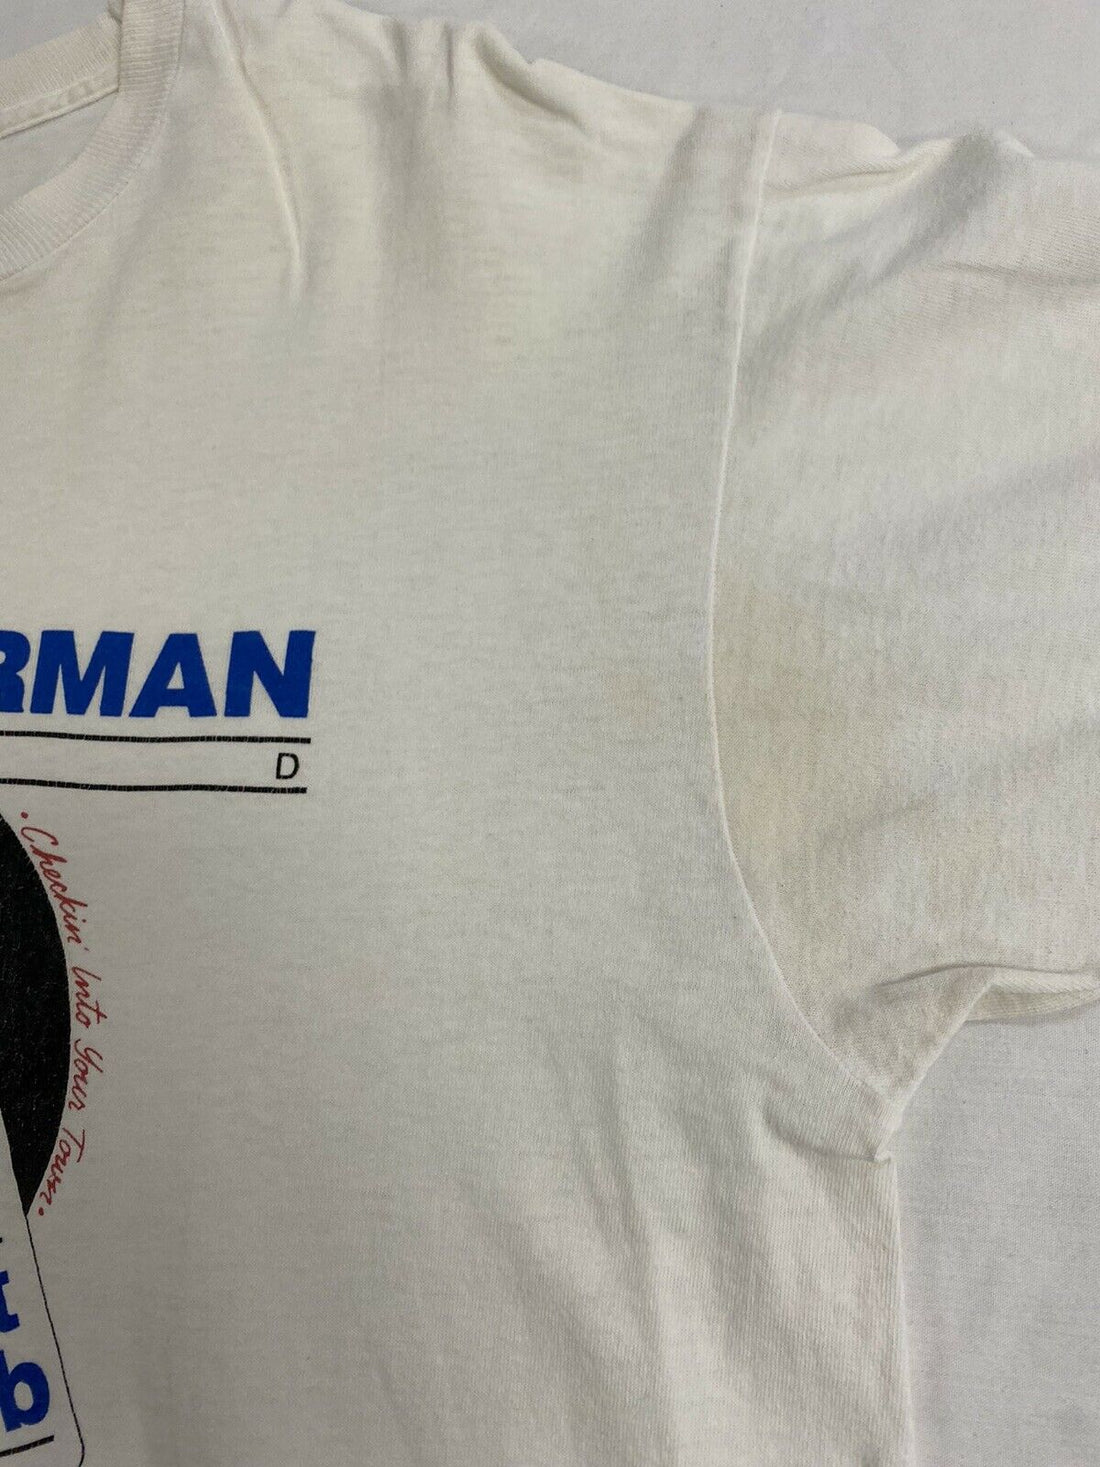 Vintage James Harmand Band Do Not Disturb T-Shirt Sz XL 90s Single Stitch Blues